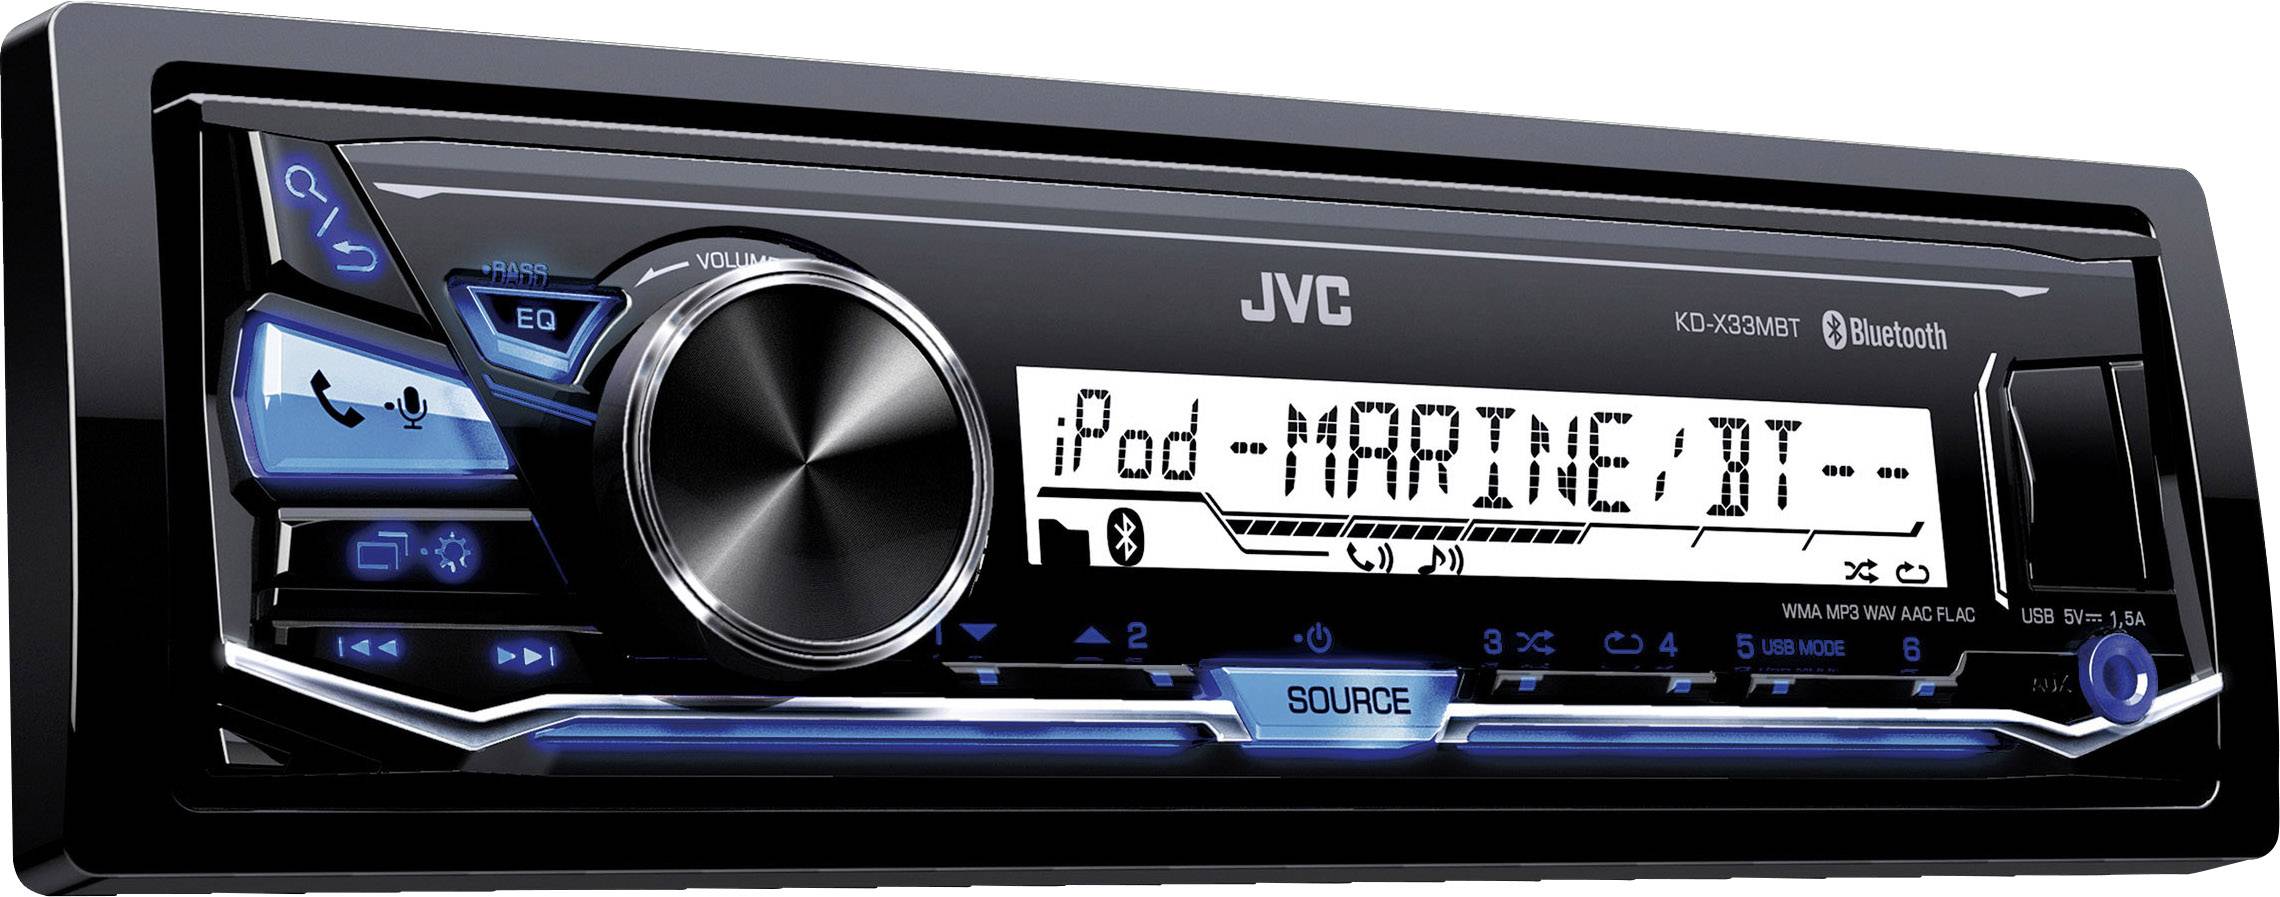 JVC kd-t702bt 1 DIN auto radio Bluetooth USB Kit de montage pour VOLVO s60 i 2000-2004 